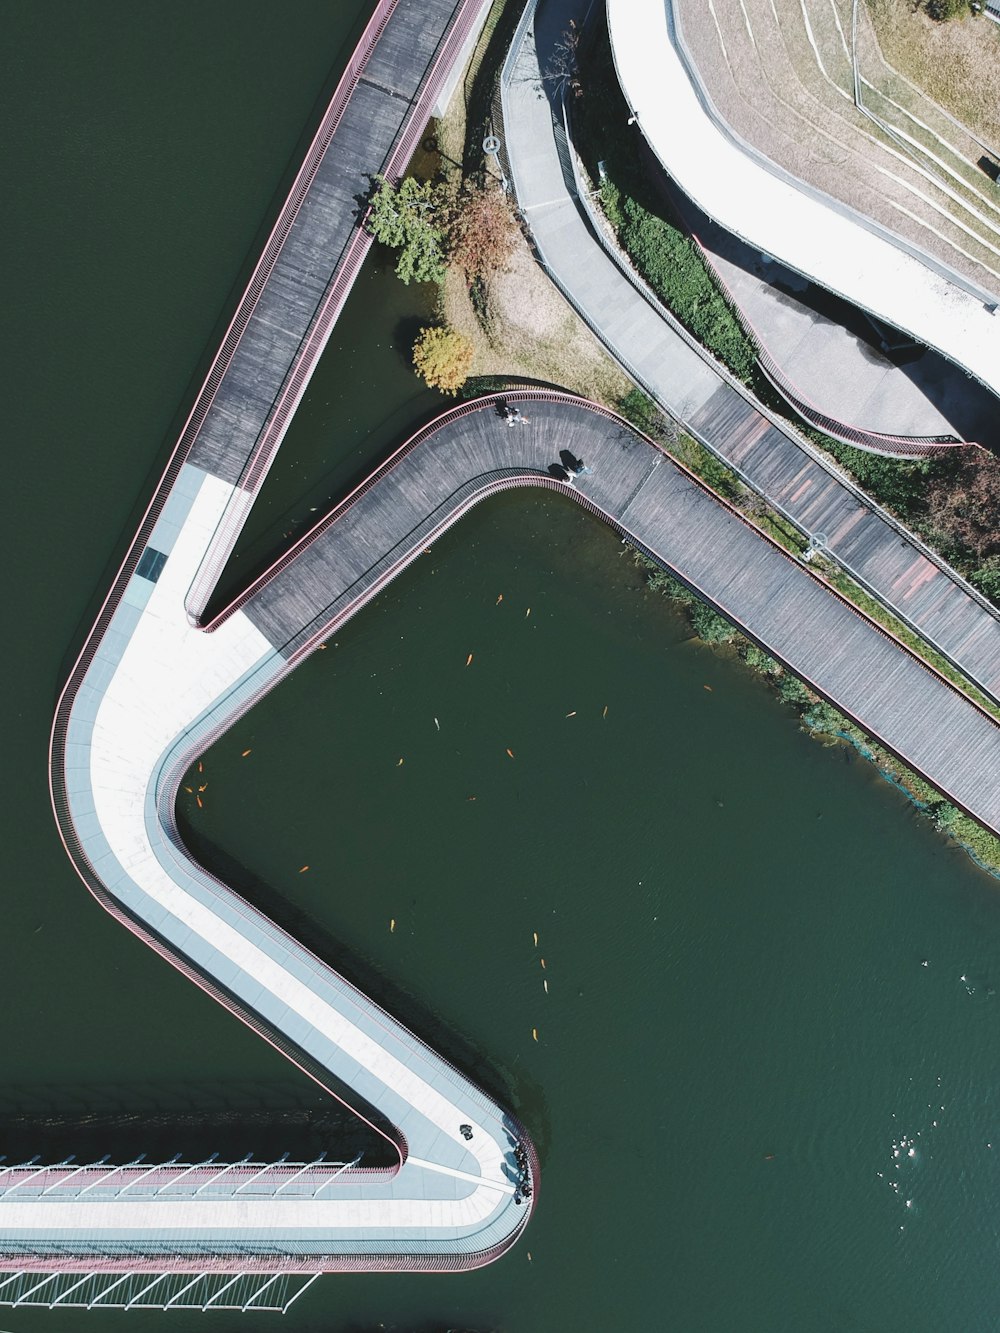 aerial photography of concrete bridge